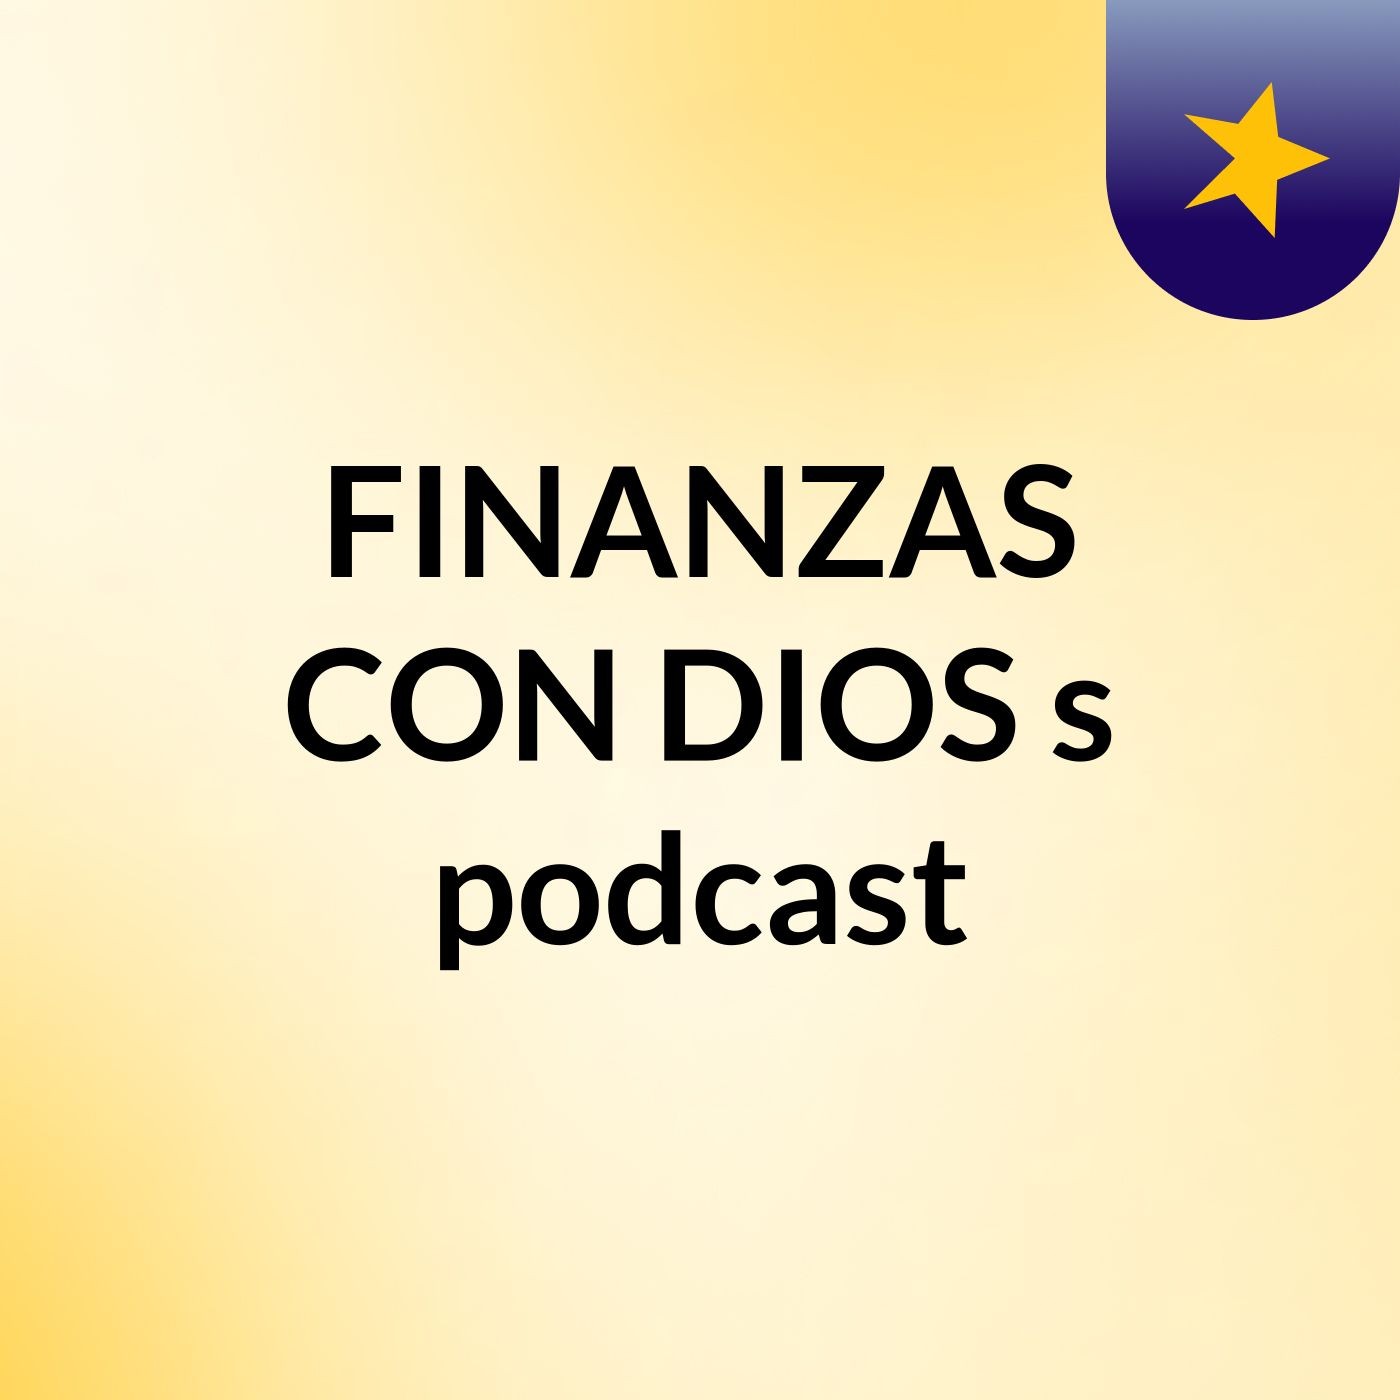 FINANZAS CON DIOS's podcast